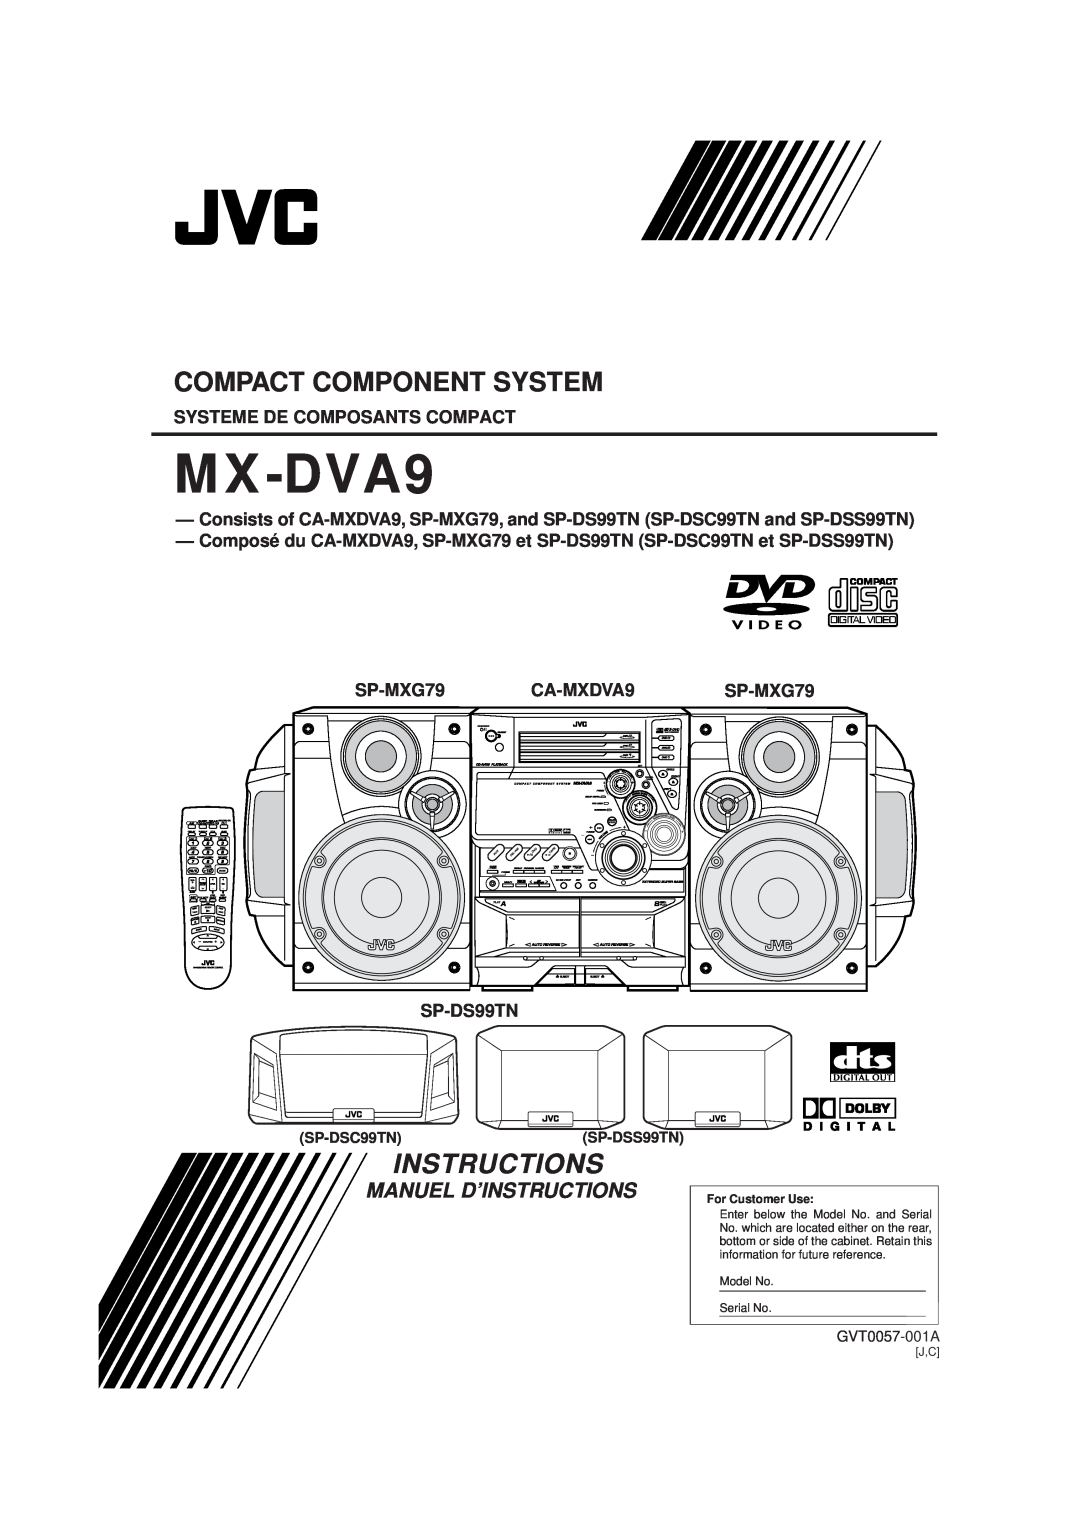 JVC MX-DVA9 manual Compact Component System, Manuel D’Instructions 